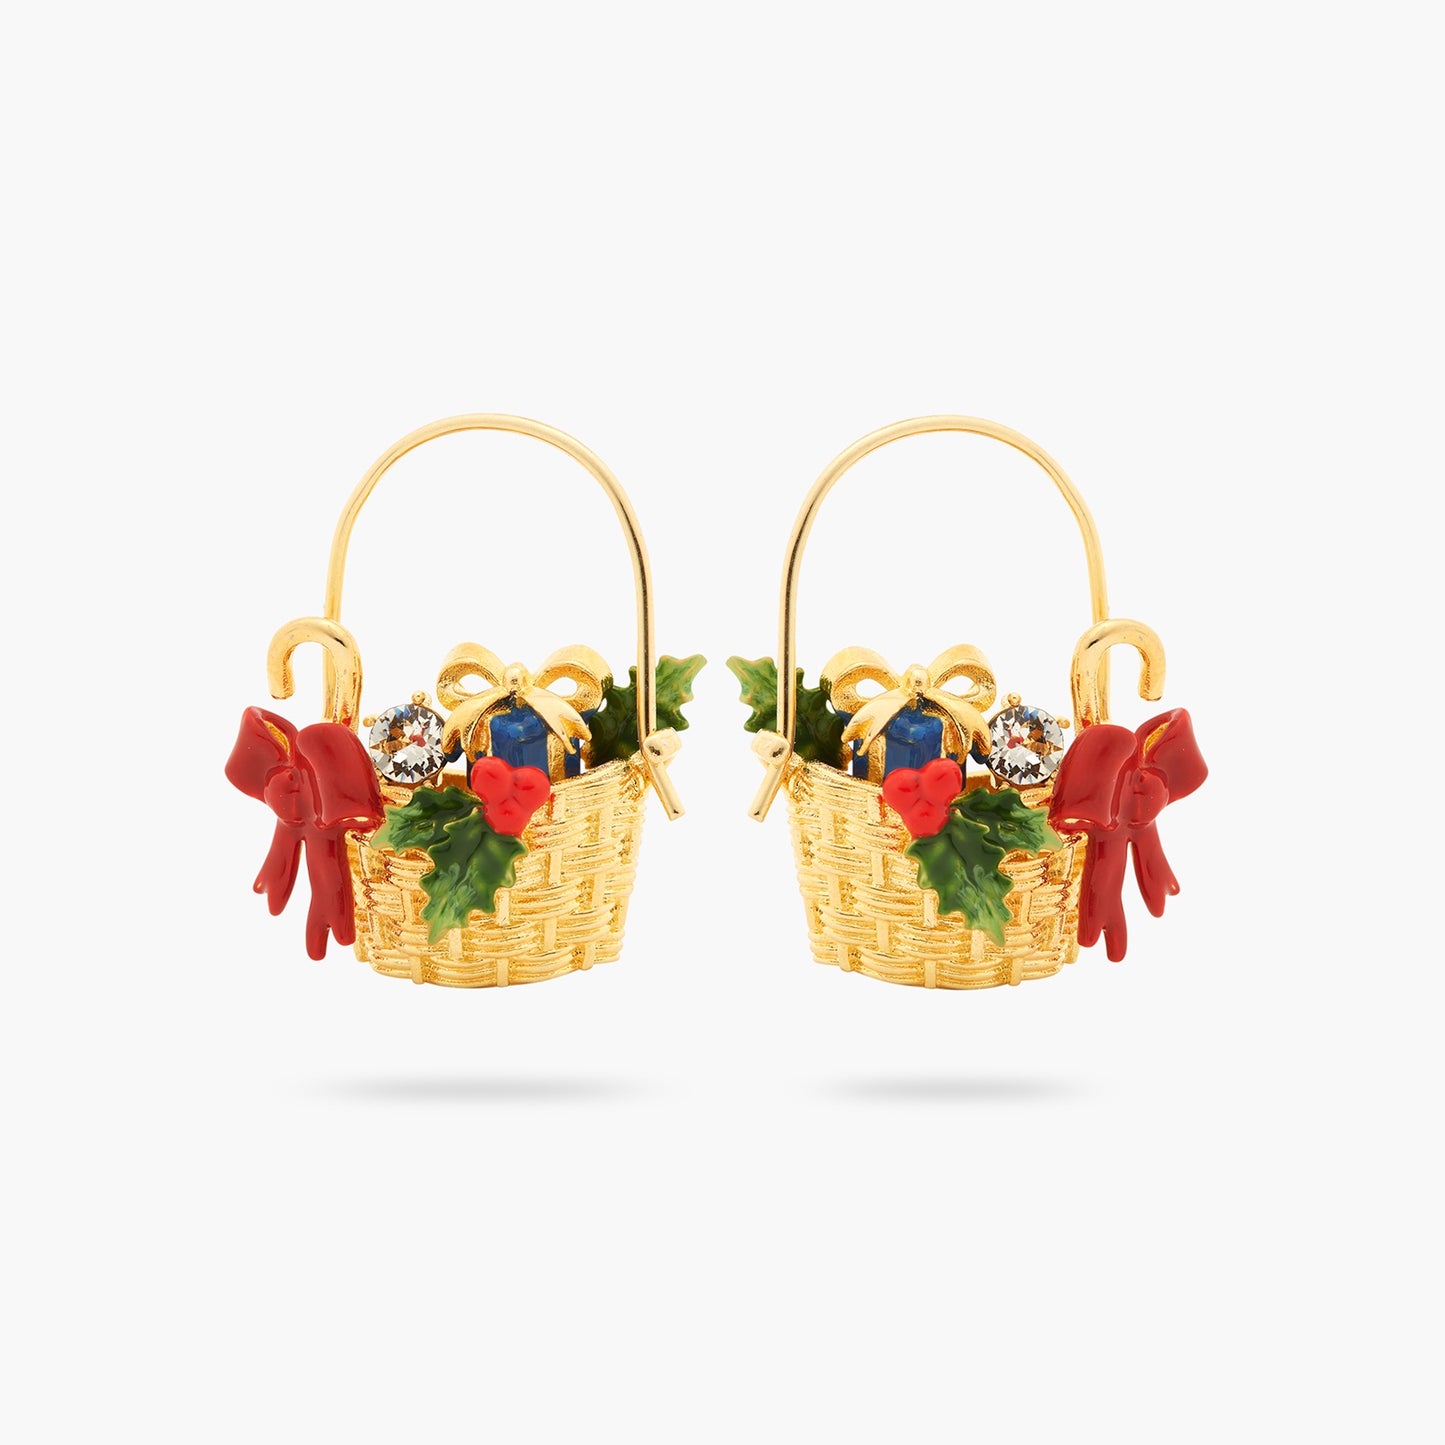 Christmas Hamper Earrings | ASPS1011